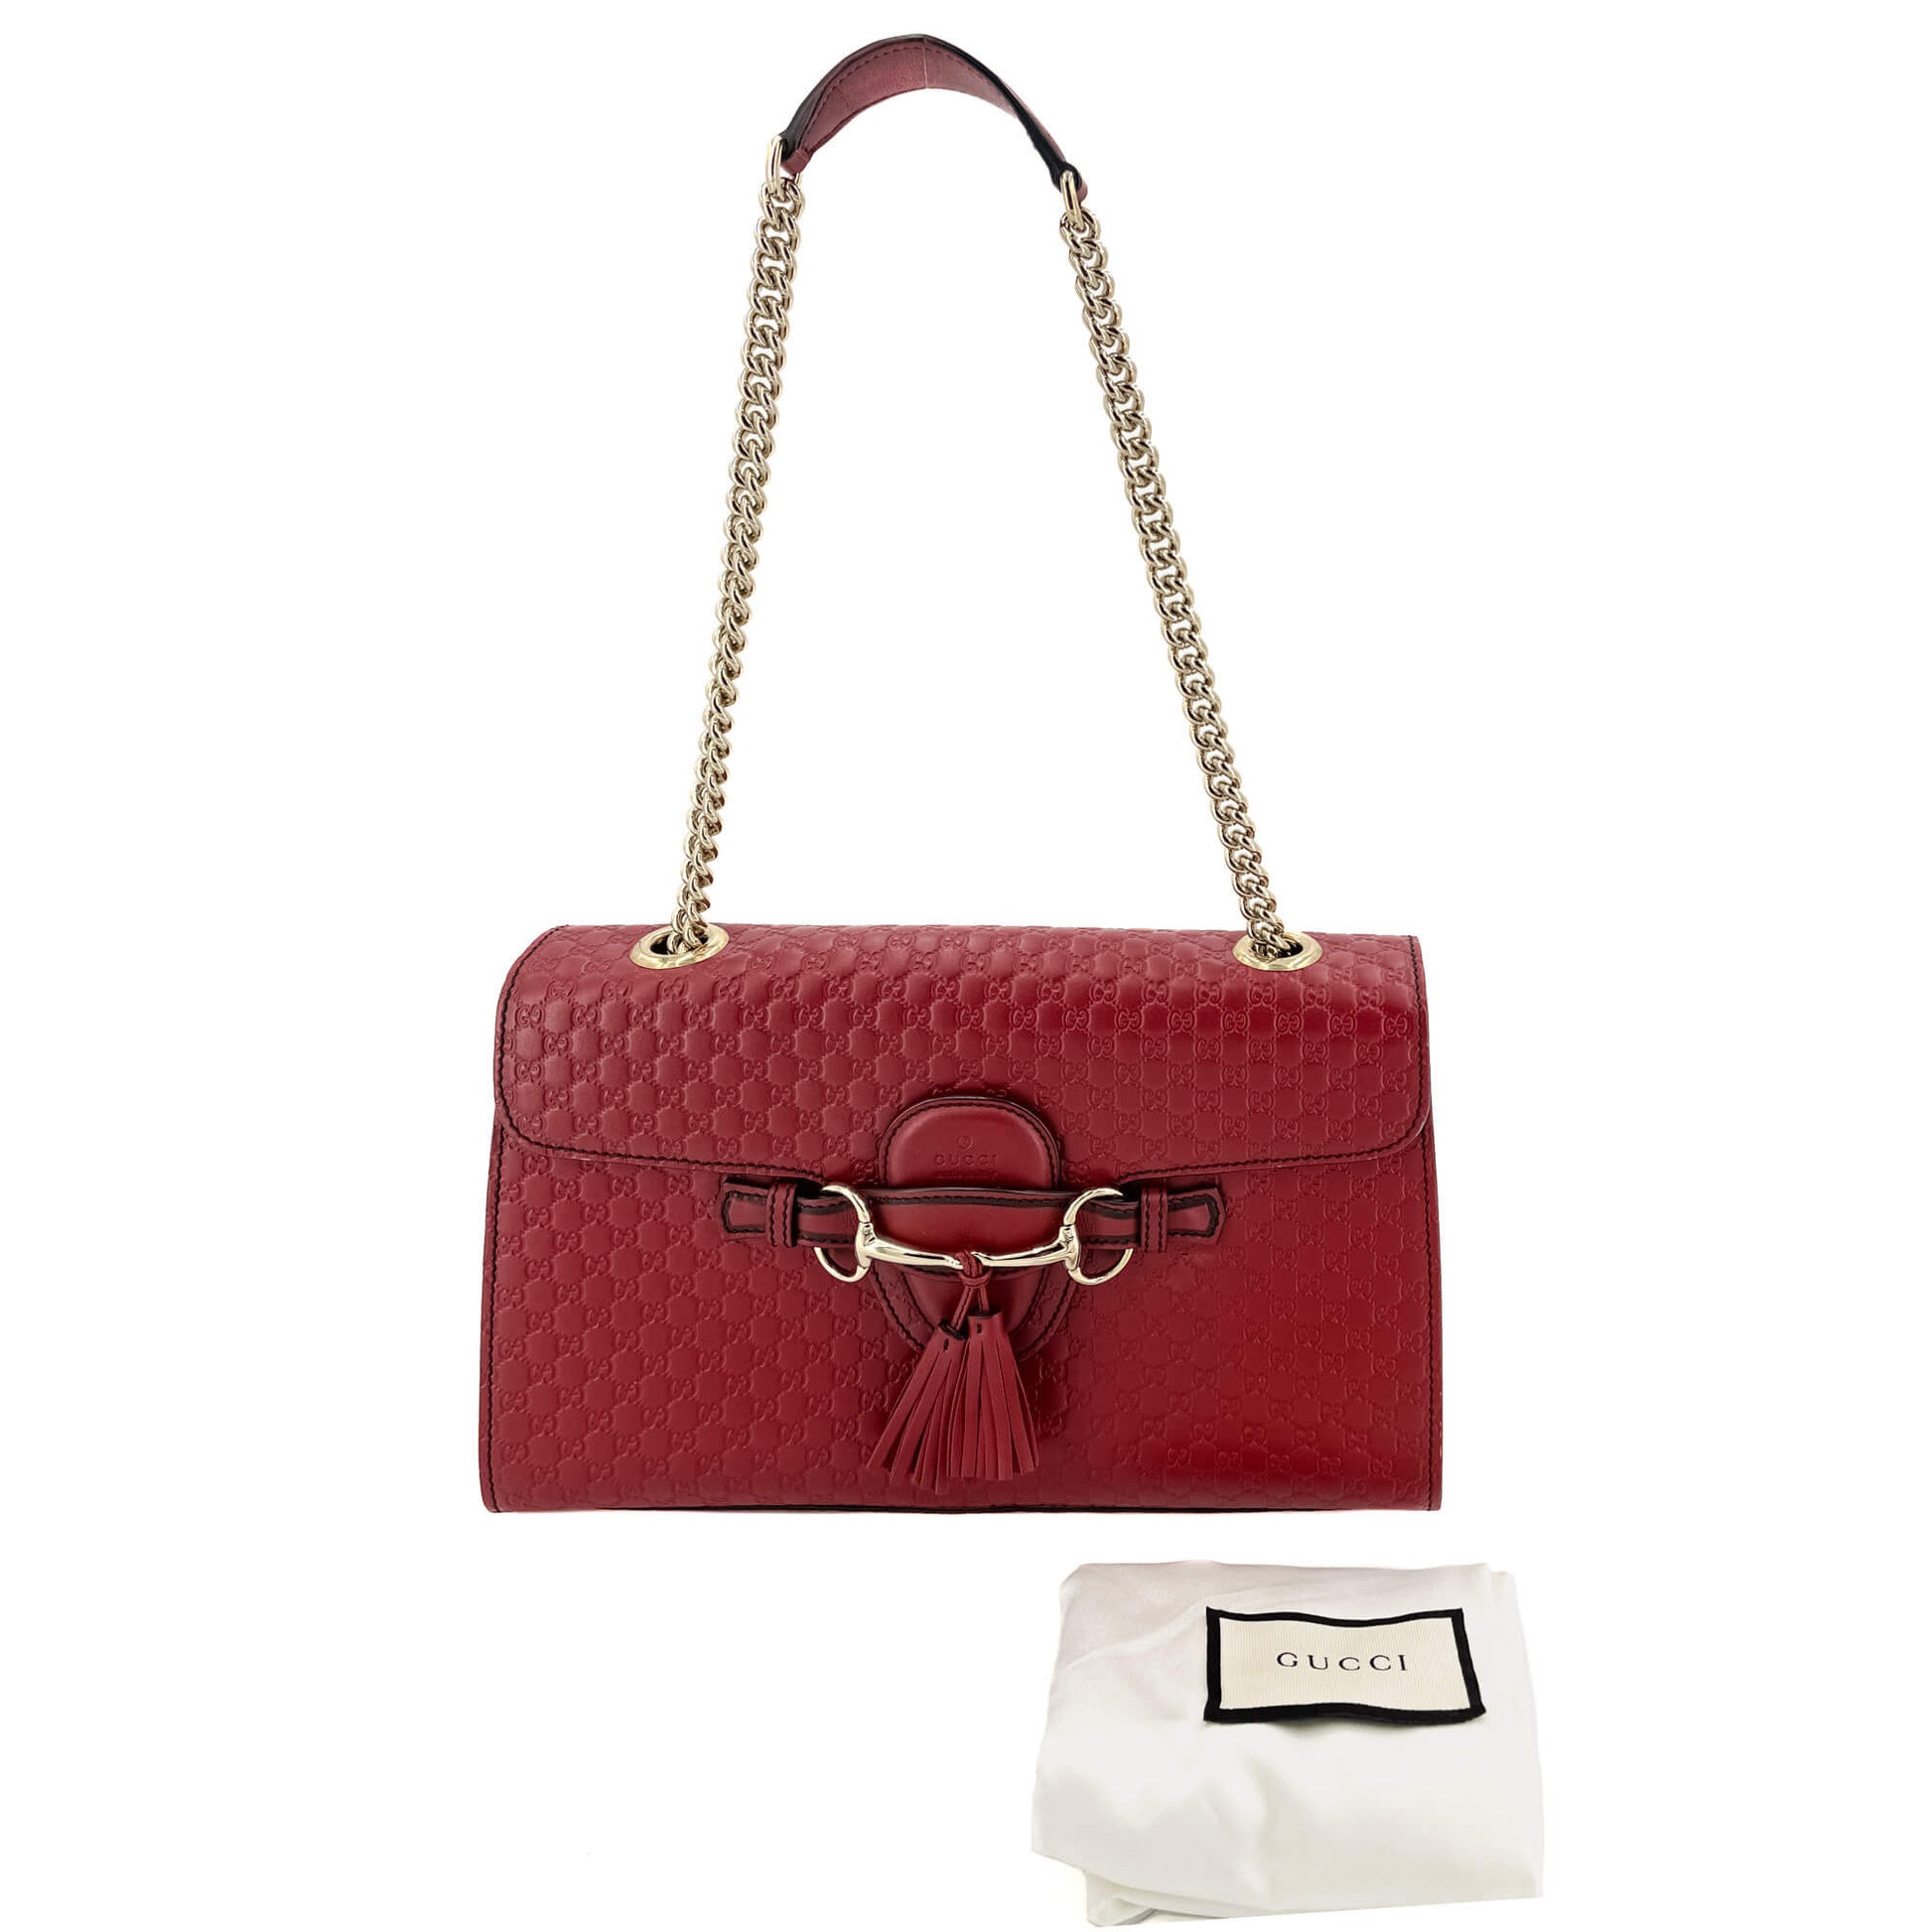 Gucci Emily Guccissima Red Leather Chain Shoulder Bag - Tabita